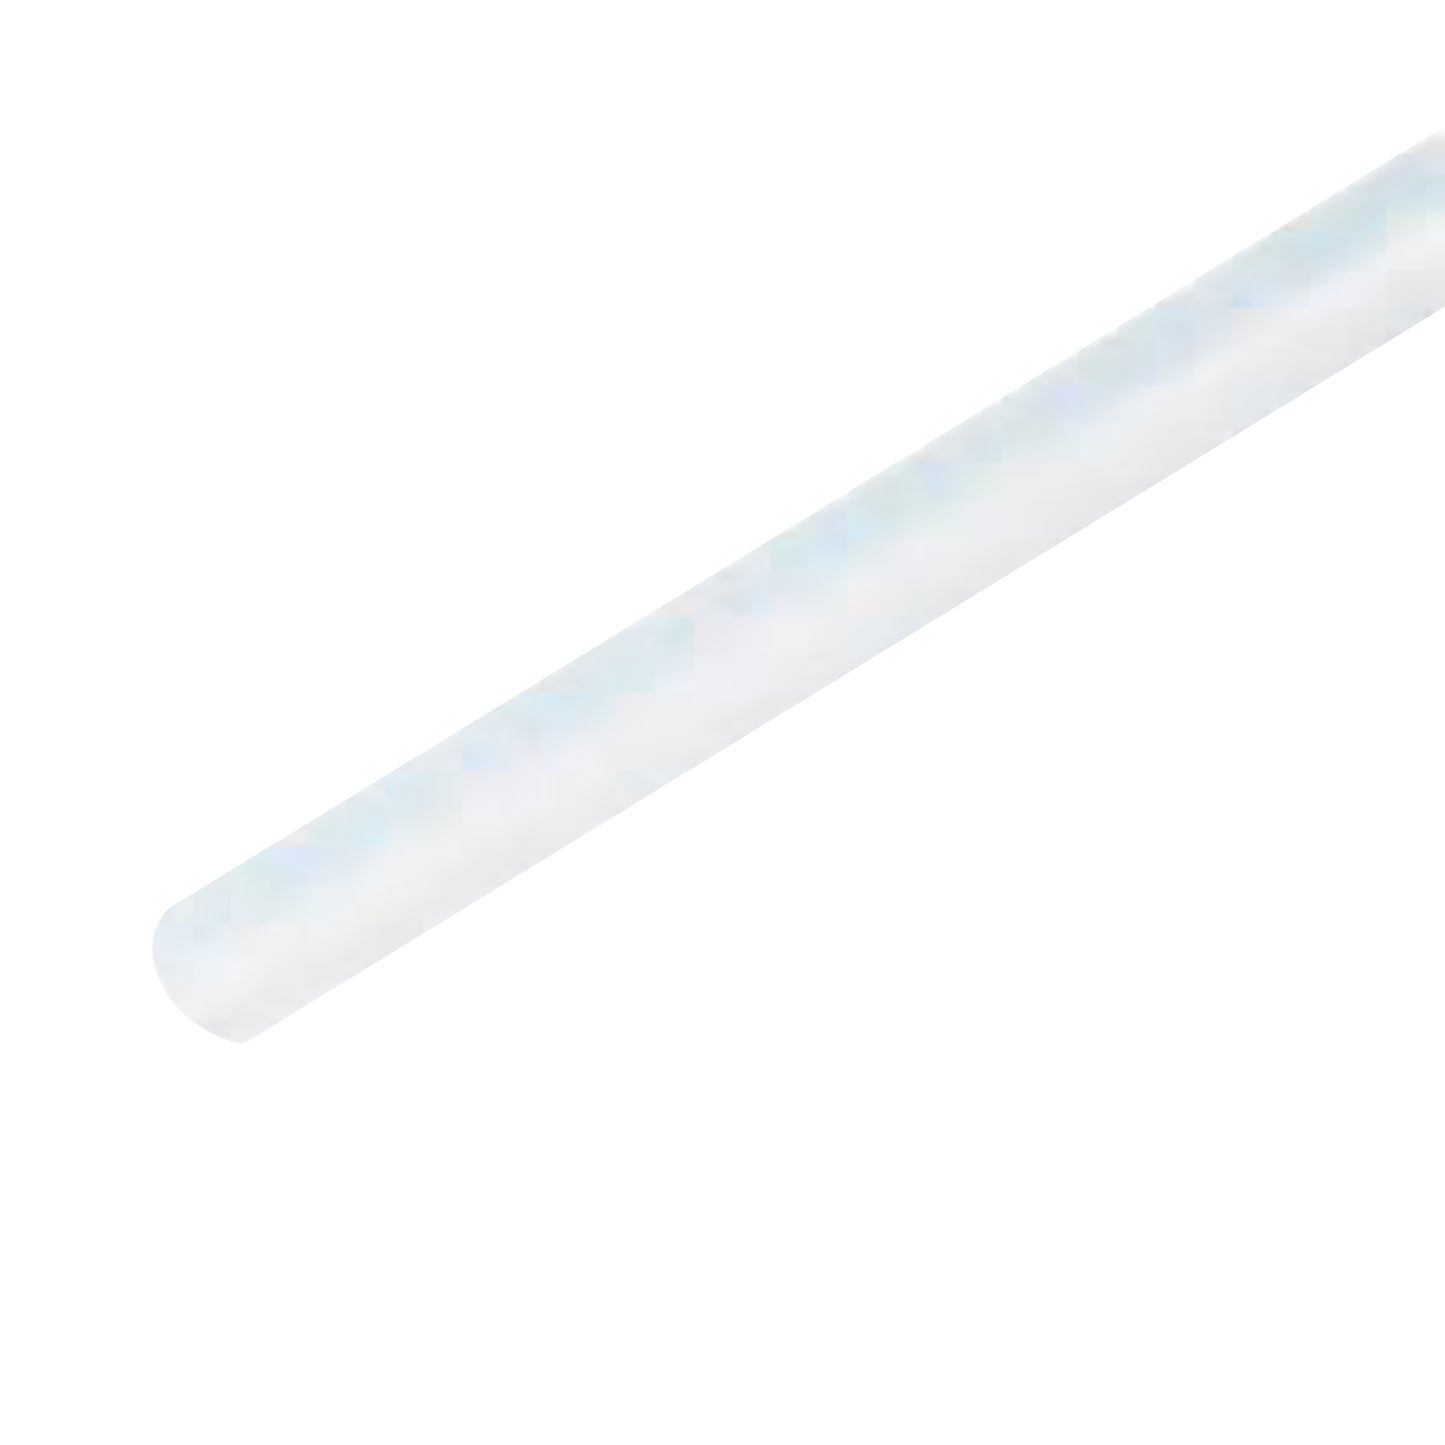 Flexible Thin Single Wall Non-Adhesive Heat Shrink Tubing 2:1 Clear 3/16" ID - 100' Ft Spool